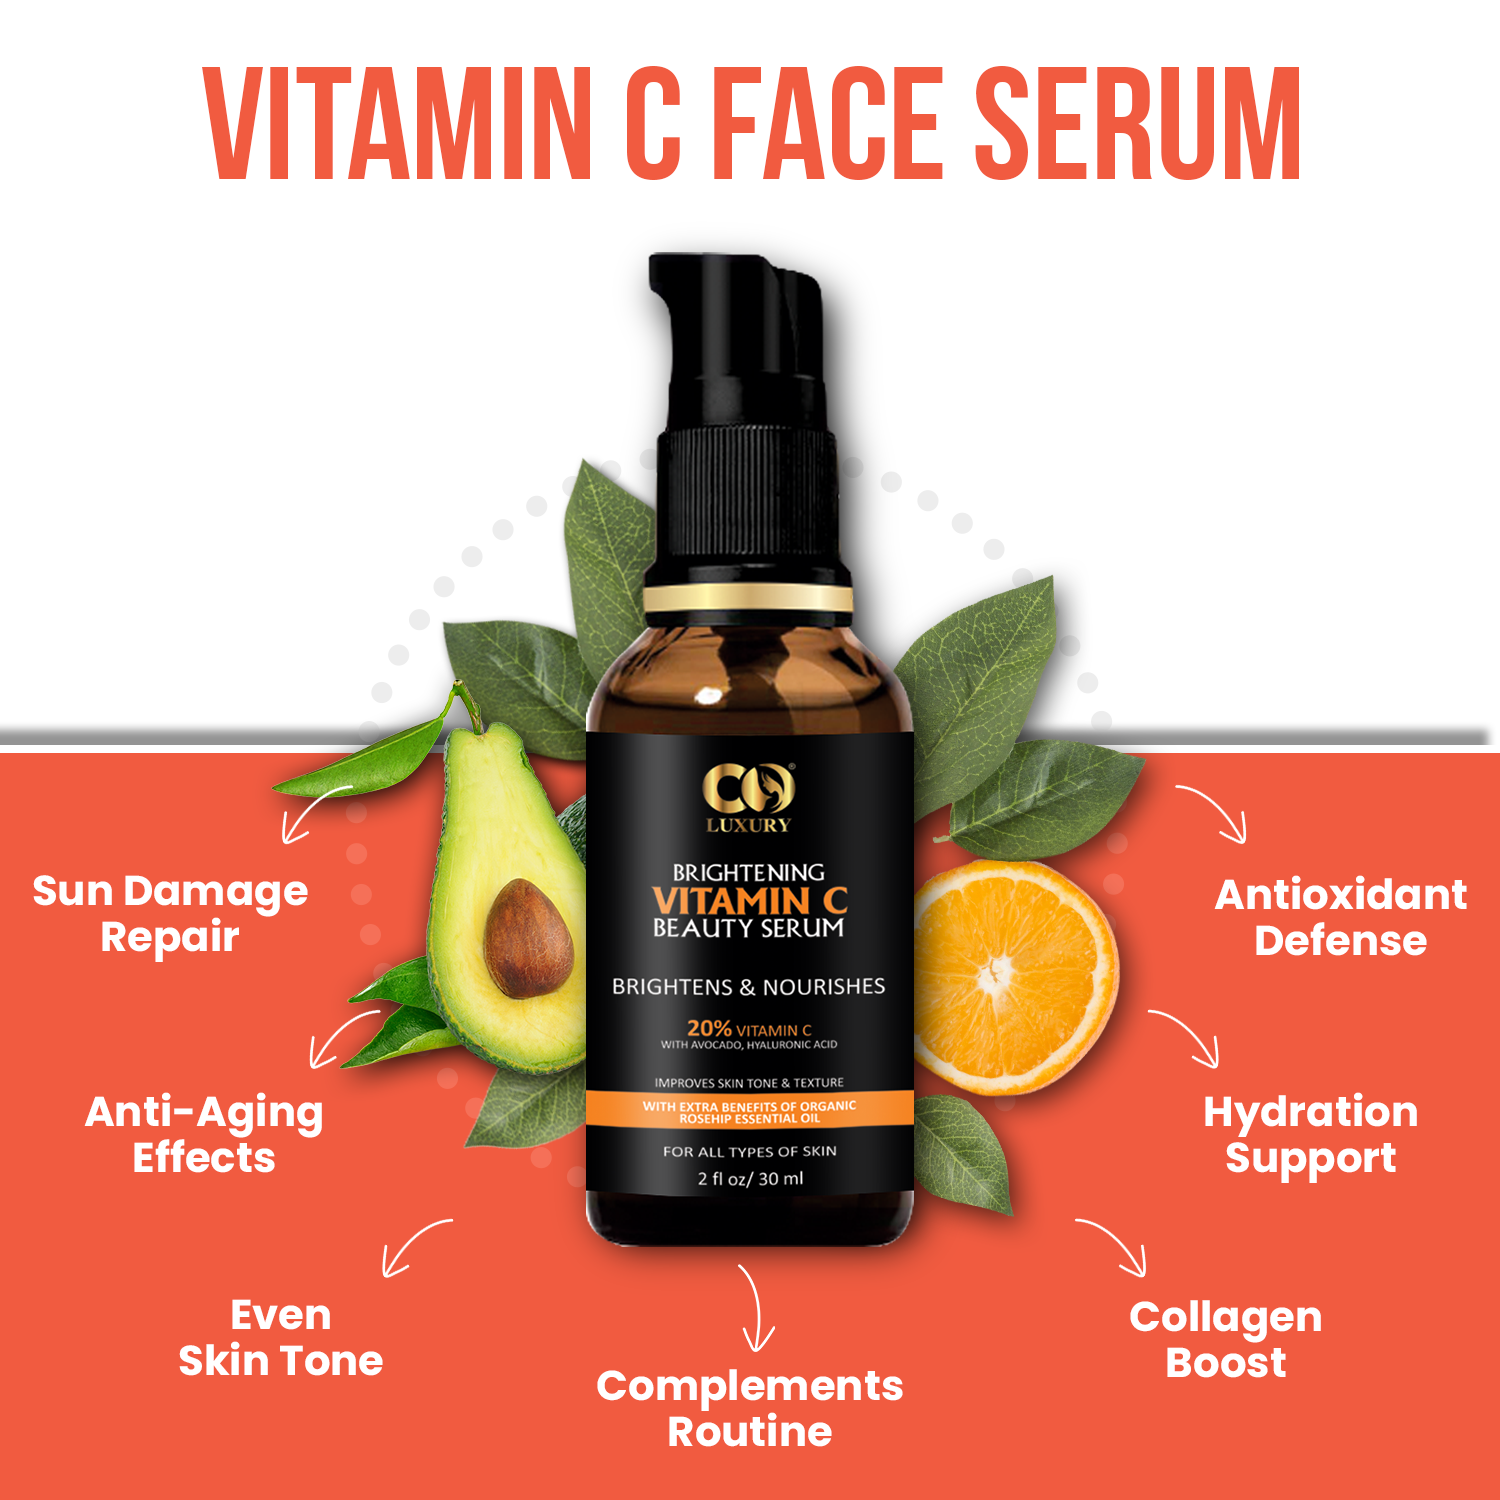 Vitamin C Face wash + Co Beauty Vitamin C serum